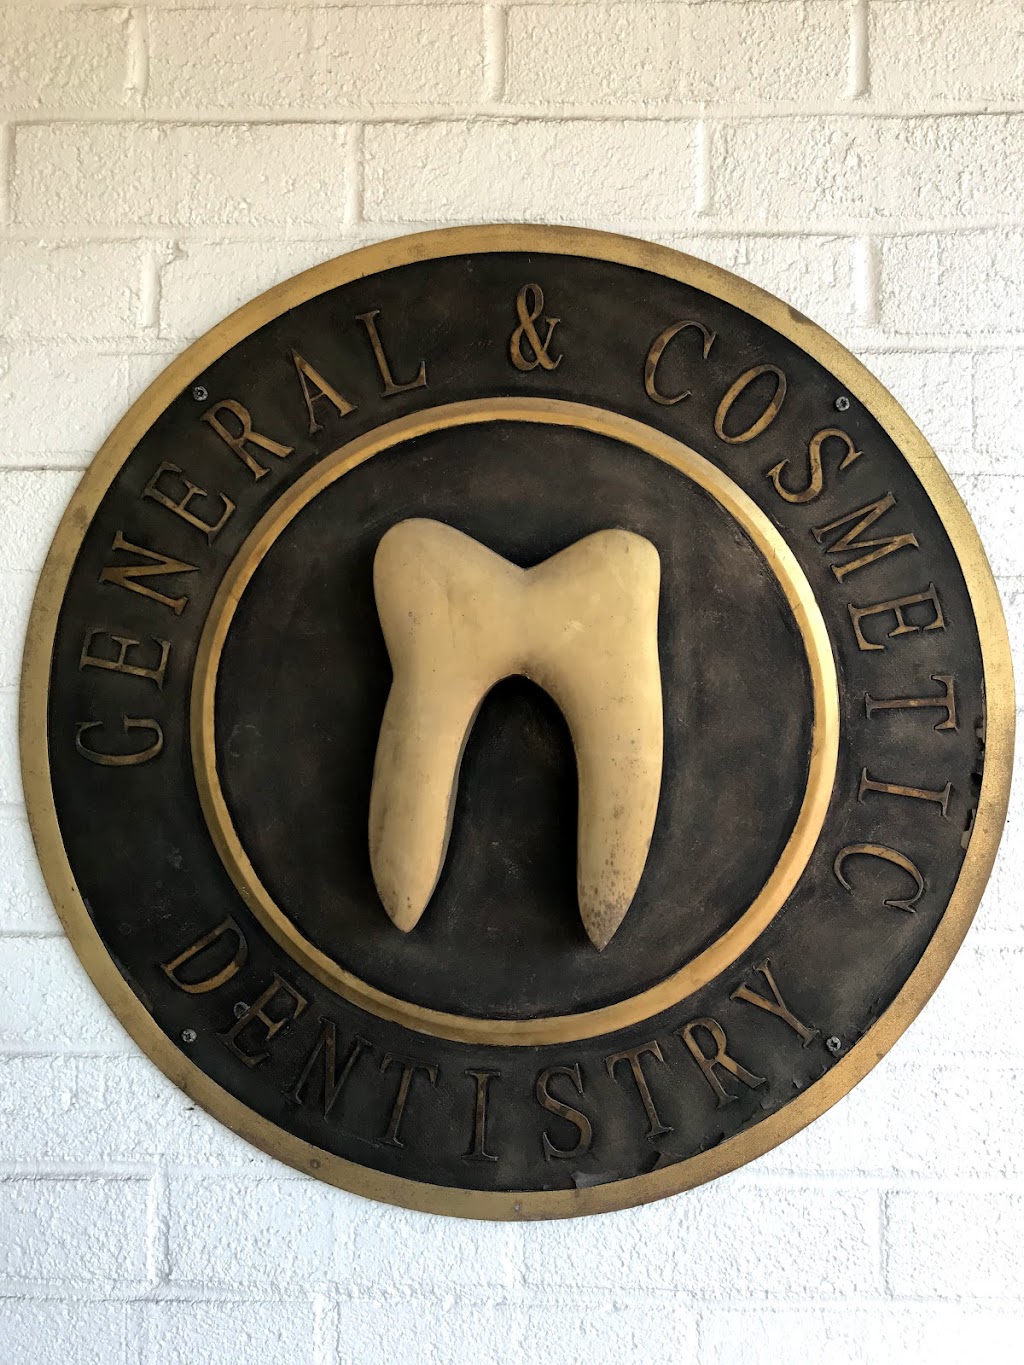 Greensboro Dental Associates | 4119 Walker Ave, Greensboro, NC 27407, USA | Phone: (336) 294-2322